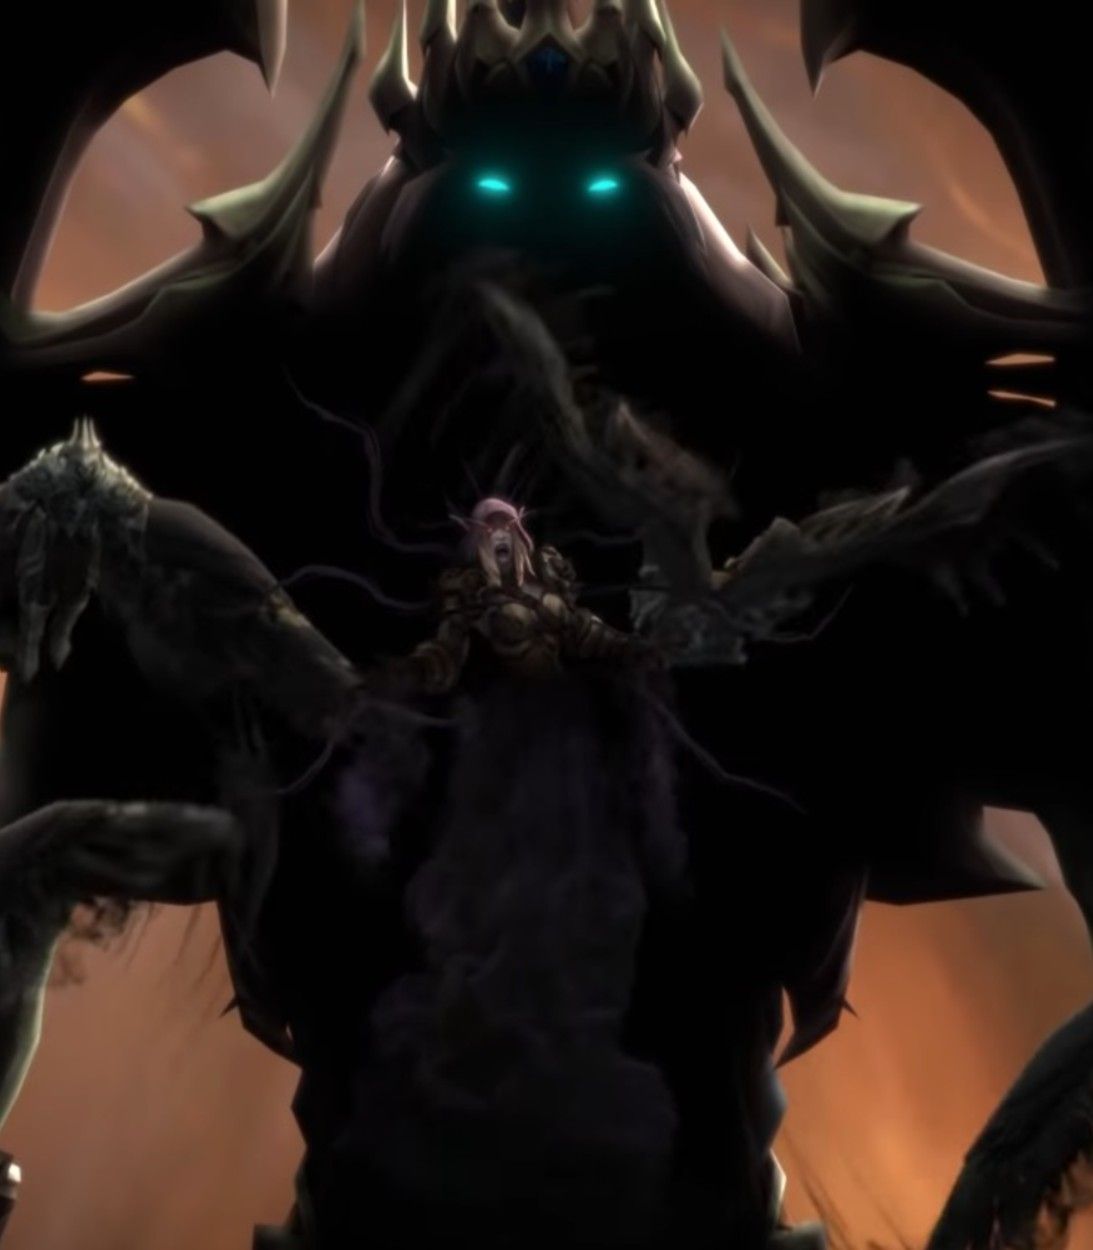 The Jailer, the final boss of World of Warcraft: Shadowlands